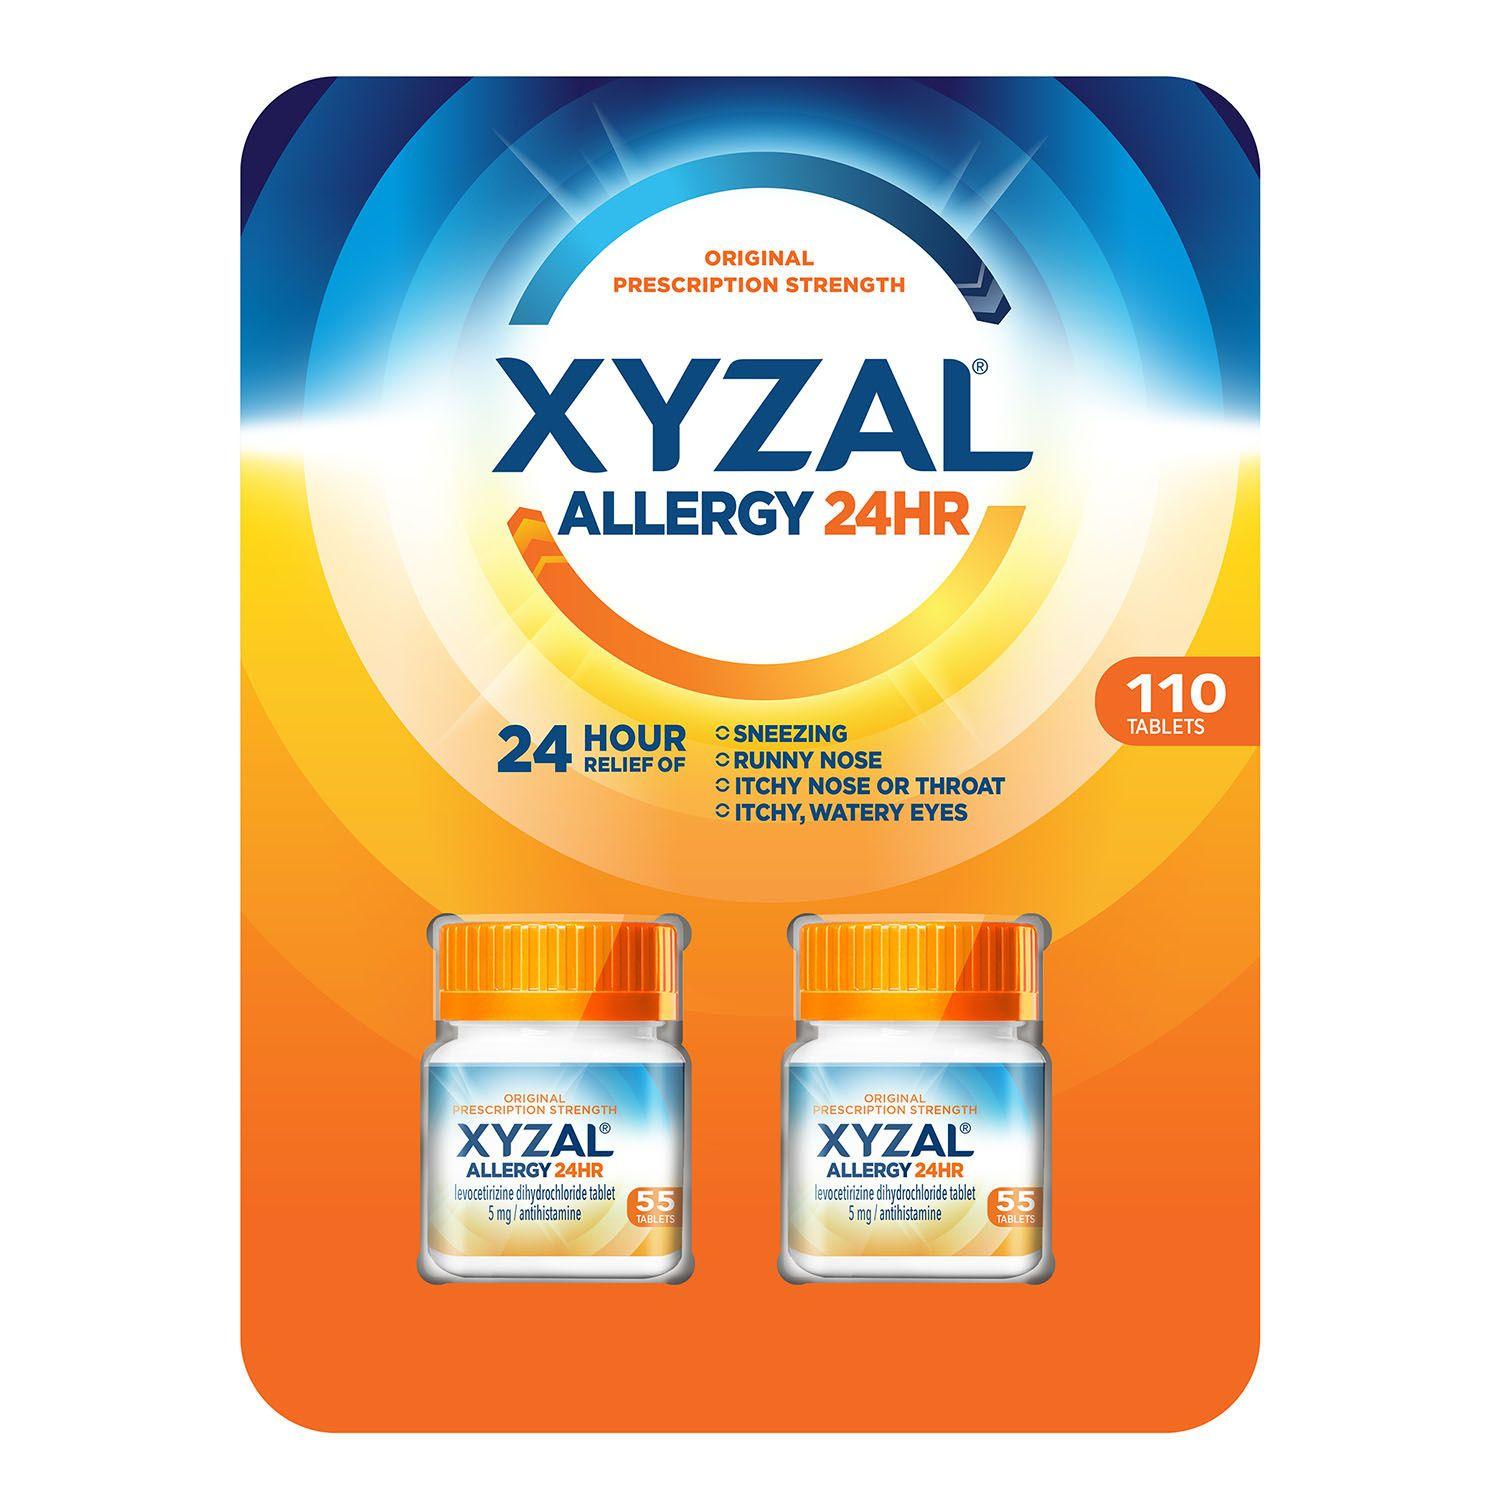  Free Xyzal Allergy 24HR Pill